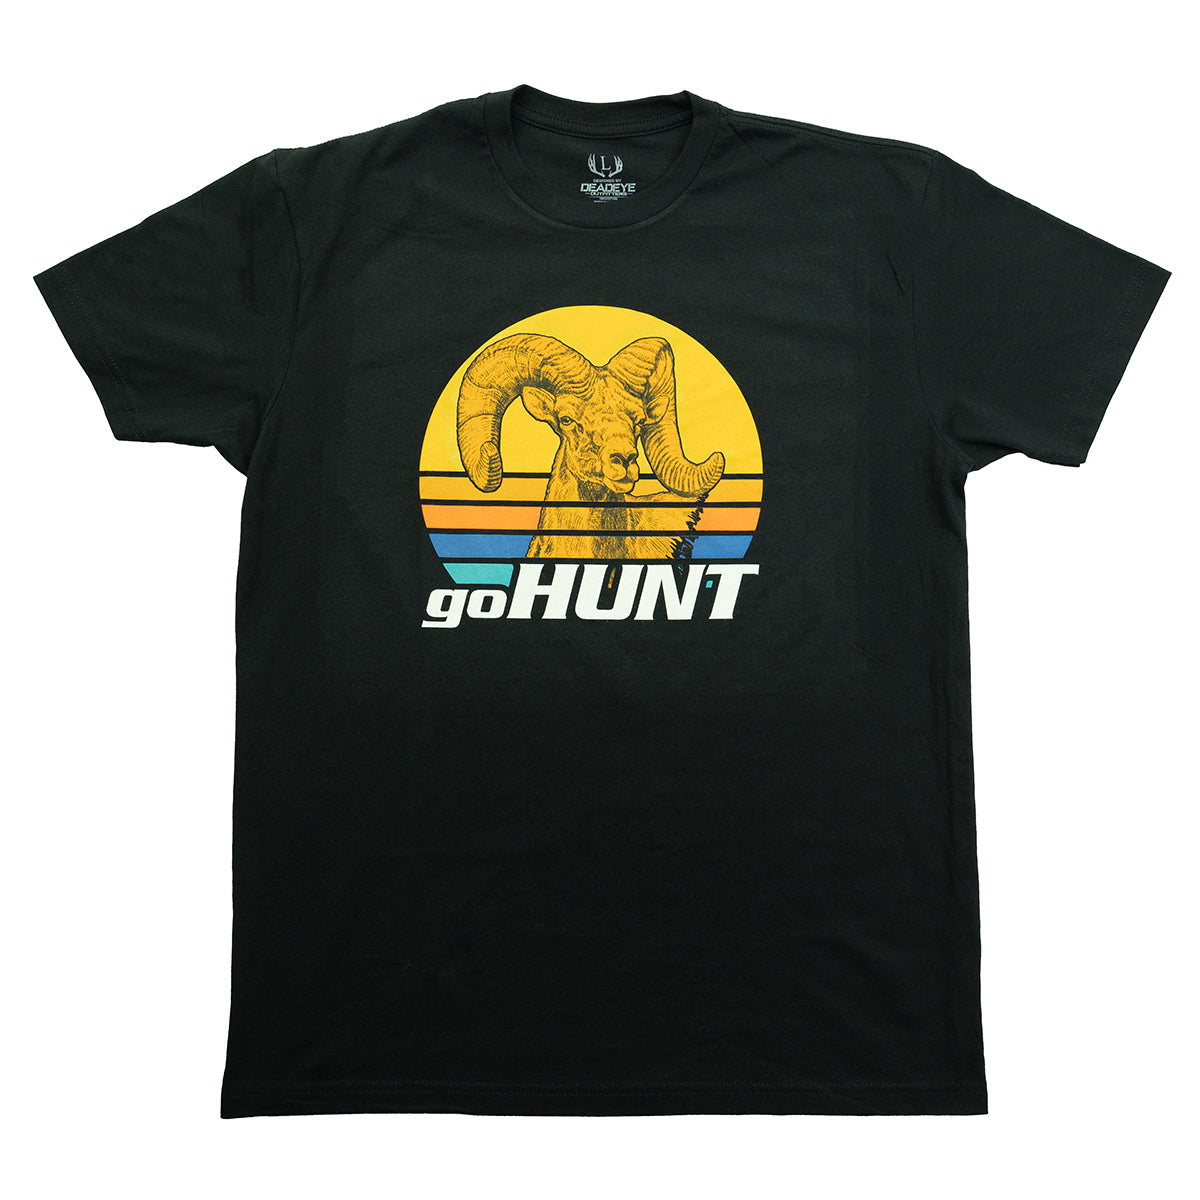 GOHUNT Nostalgia Ram T-Shirt in goHUNT Nostalgia Ram T-Shirt by goHUNT | Apparel - goHUNT Shop by GOHUNT | GOHUNT - GOHUNT Shop